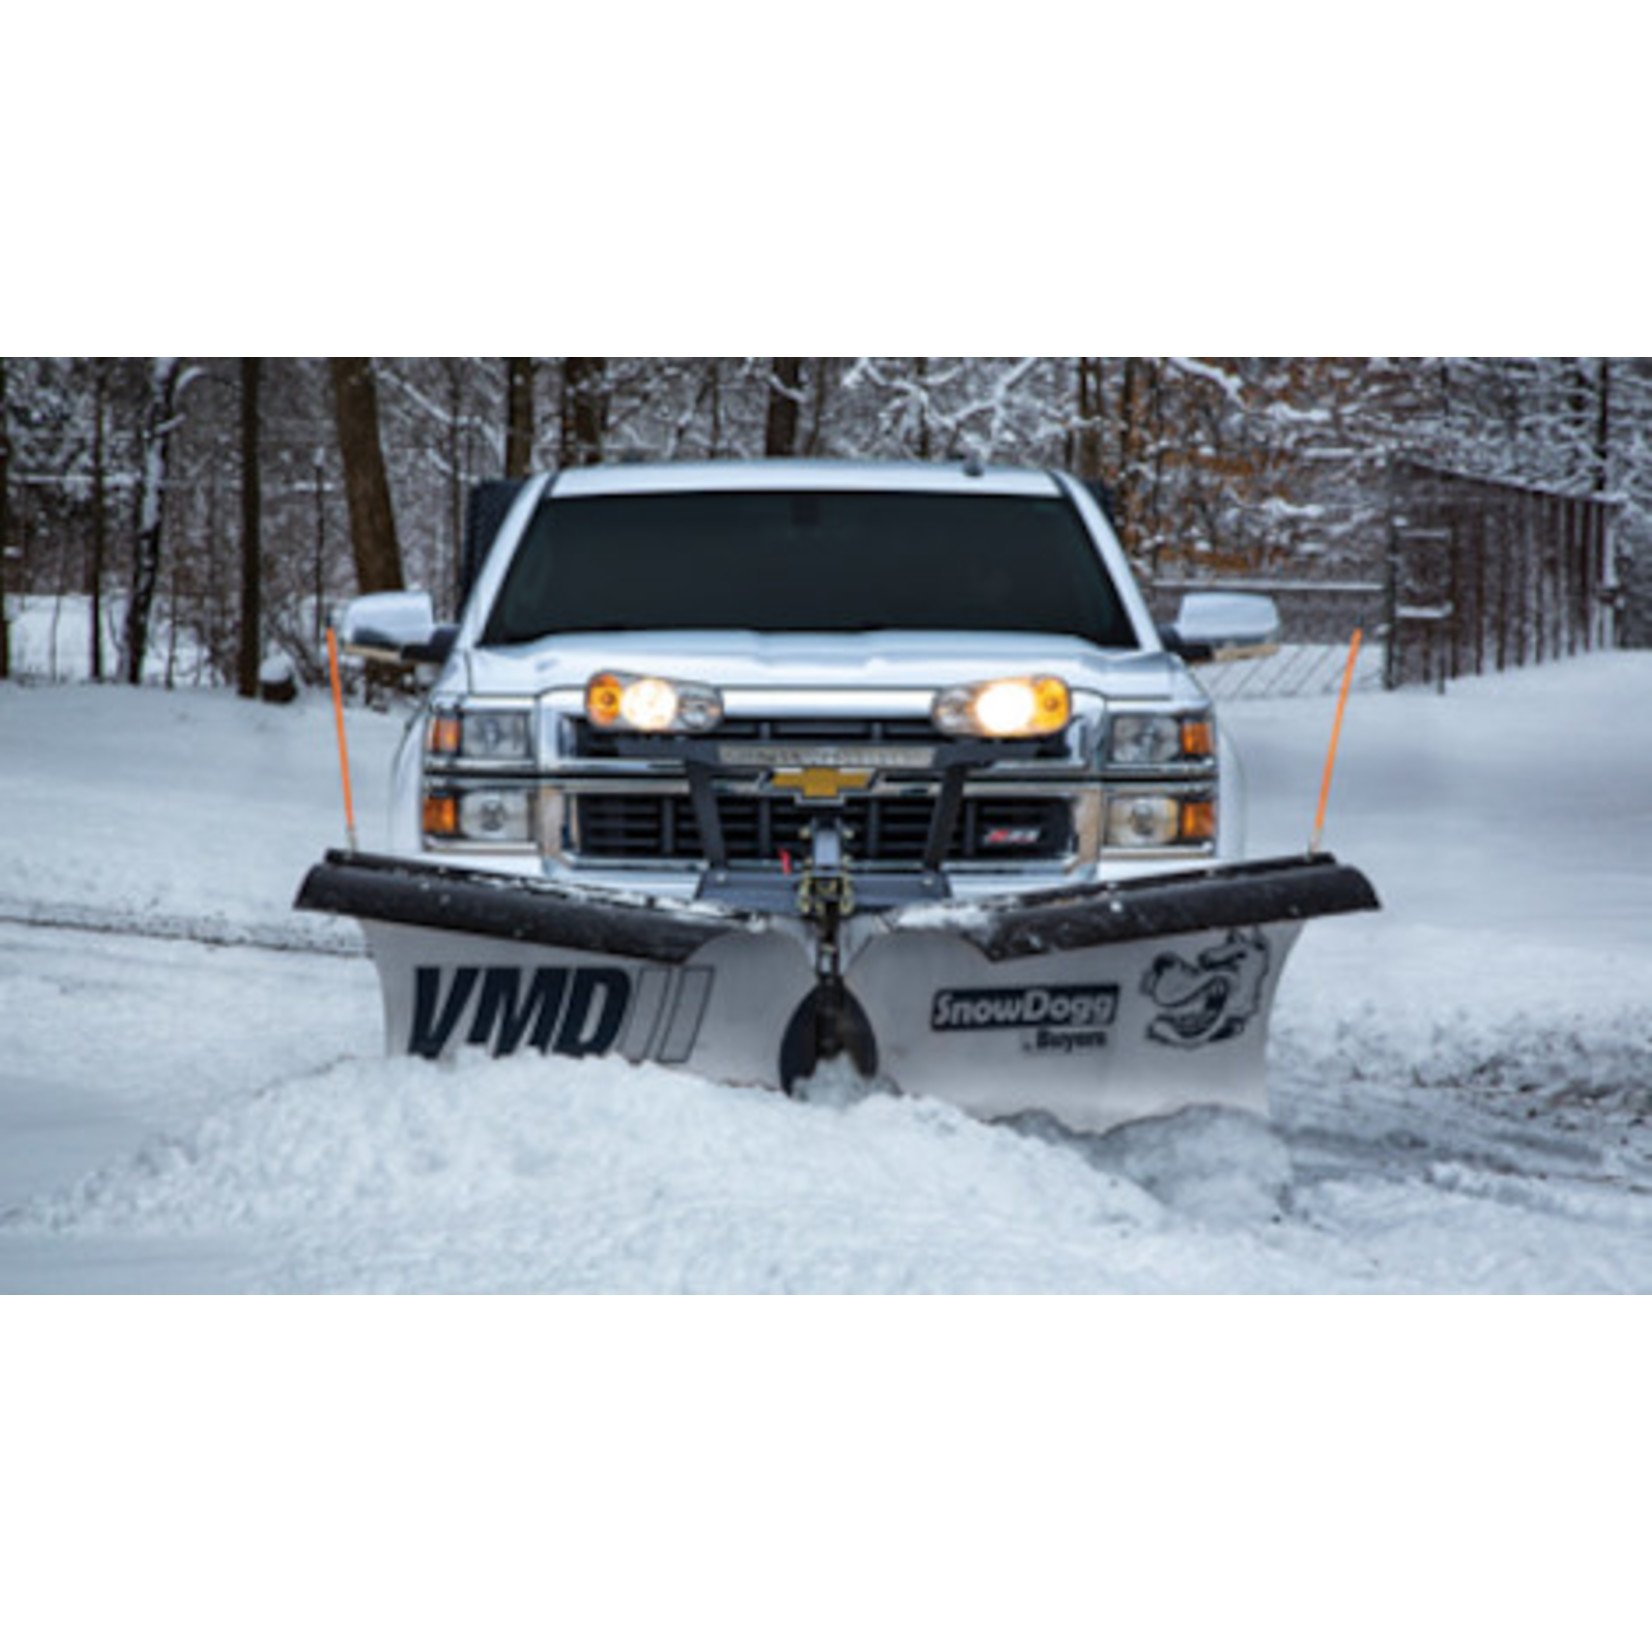 SnowDogg® VMDII Snow Plow - Bigfoot Landscape Supply